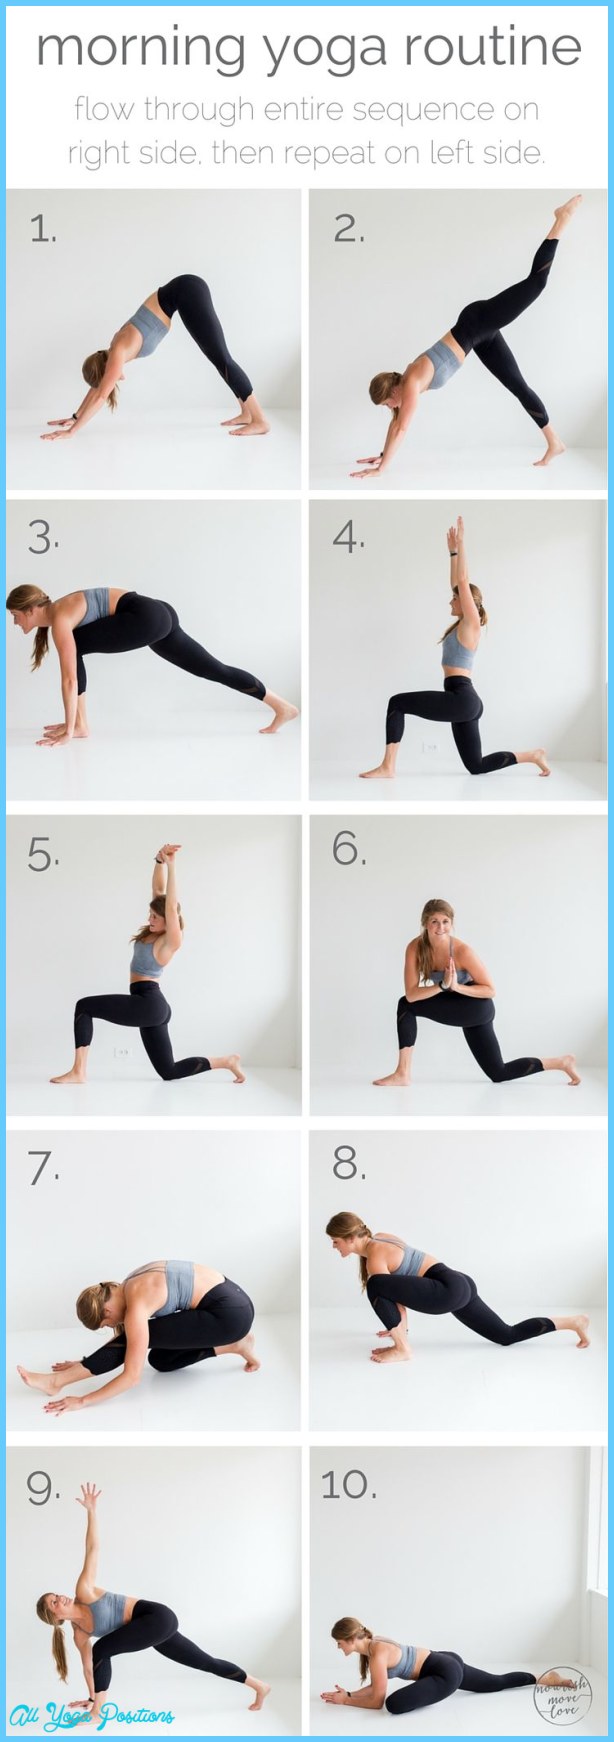 Yoga poses morning - AllYogaPositions.com